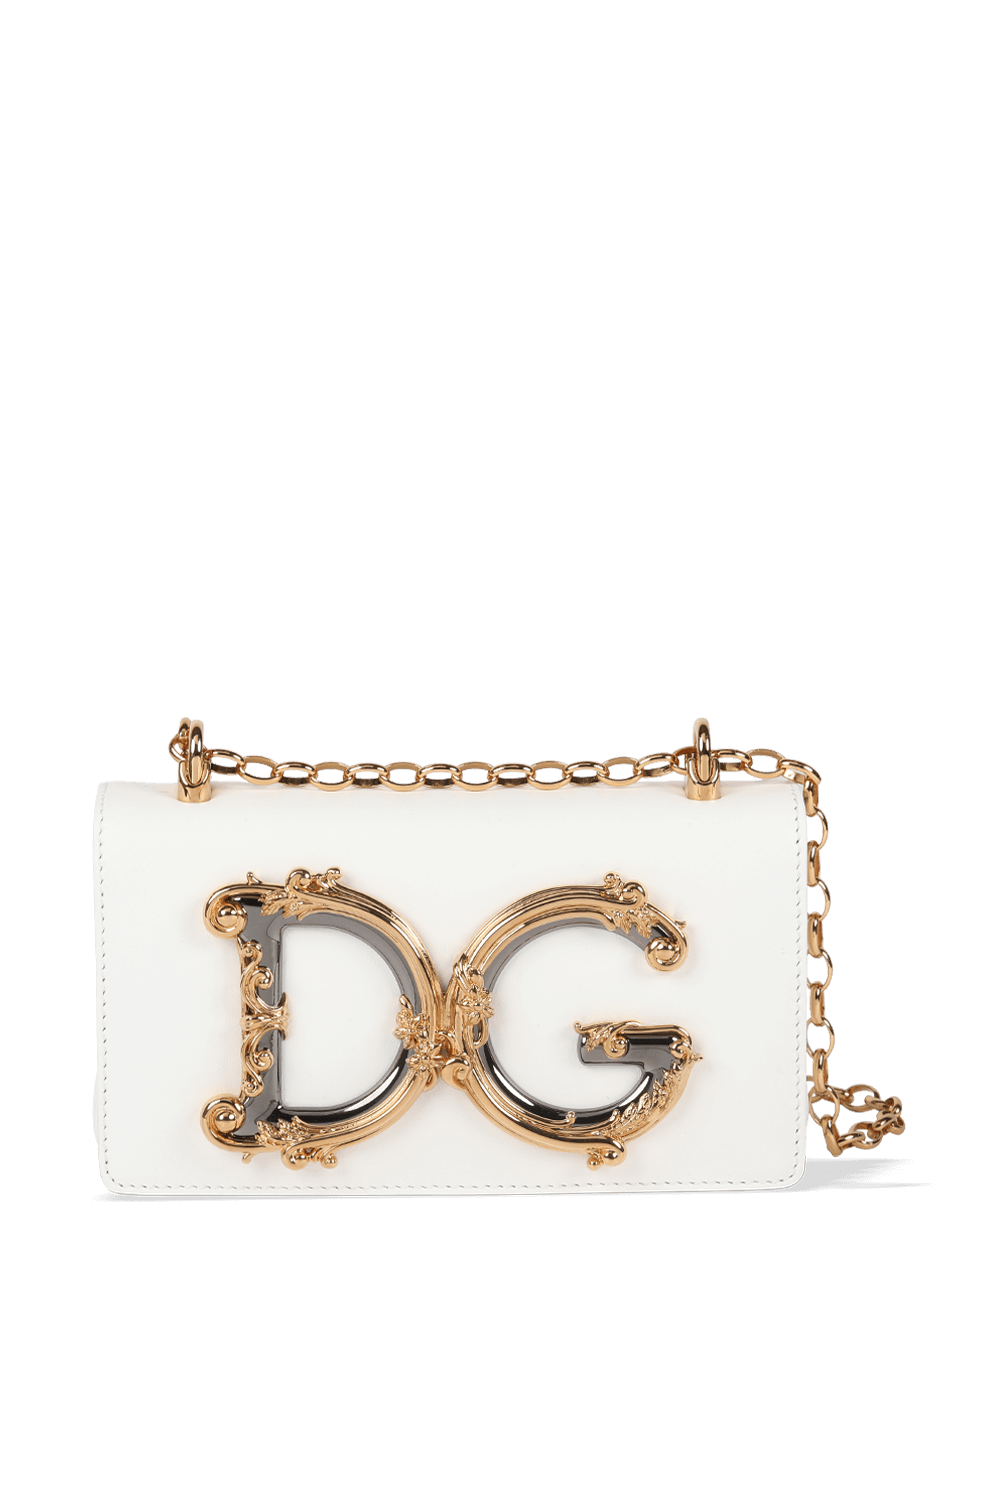 DG Girls Shoulder Bag in White DOLCE & GABBANA